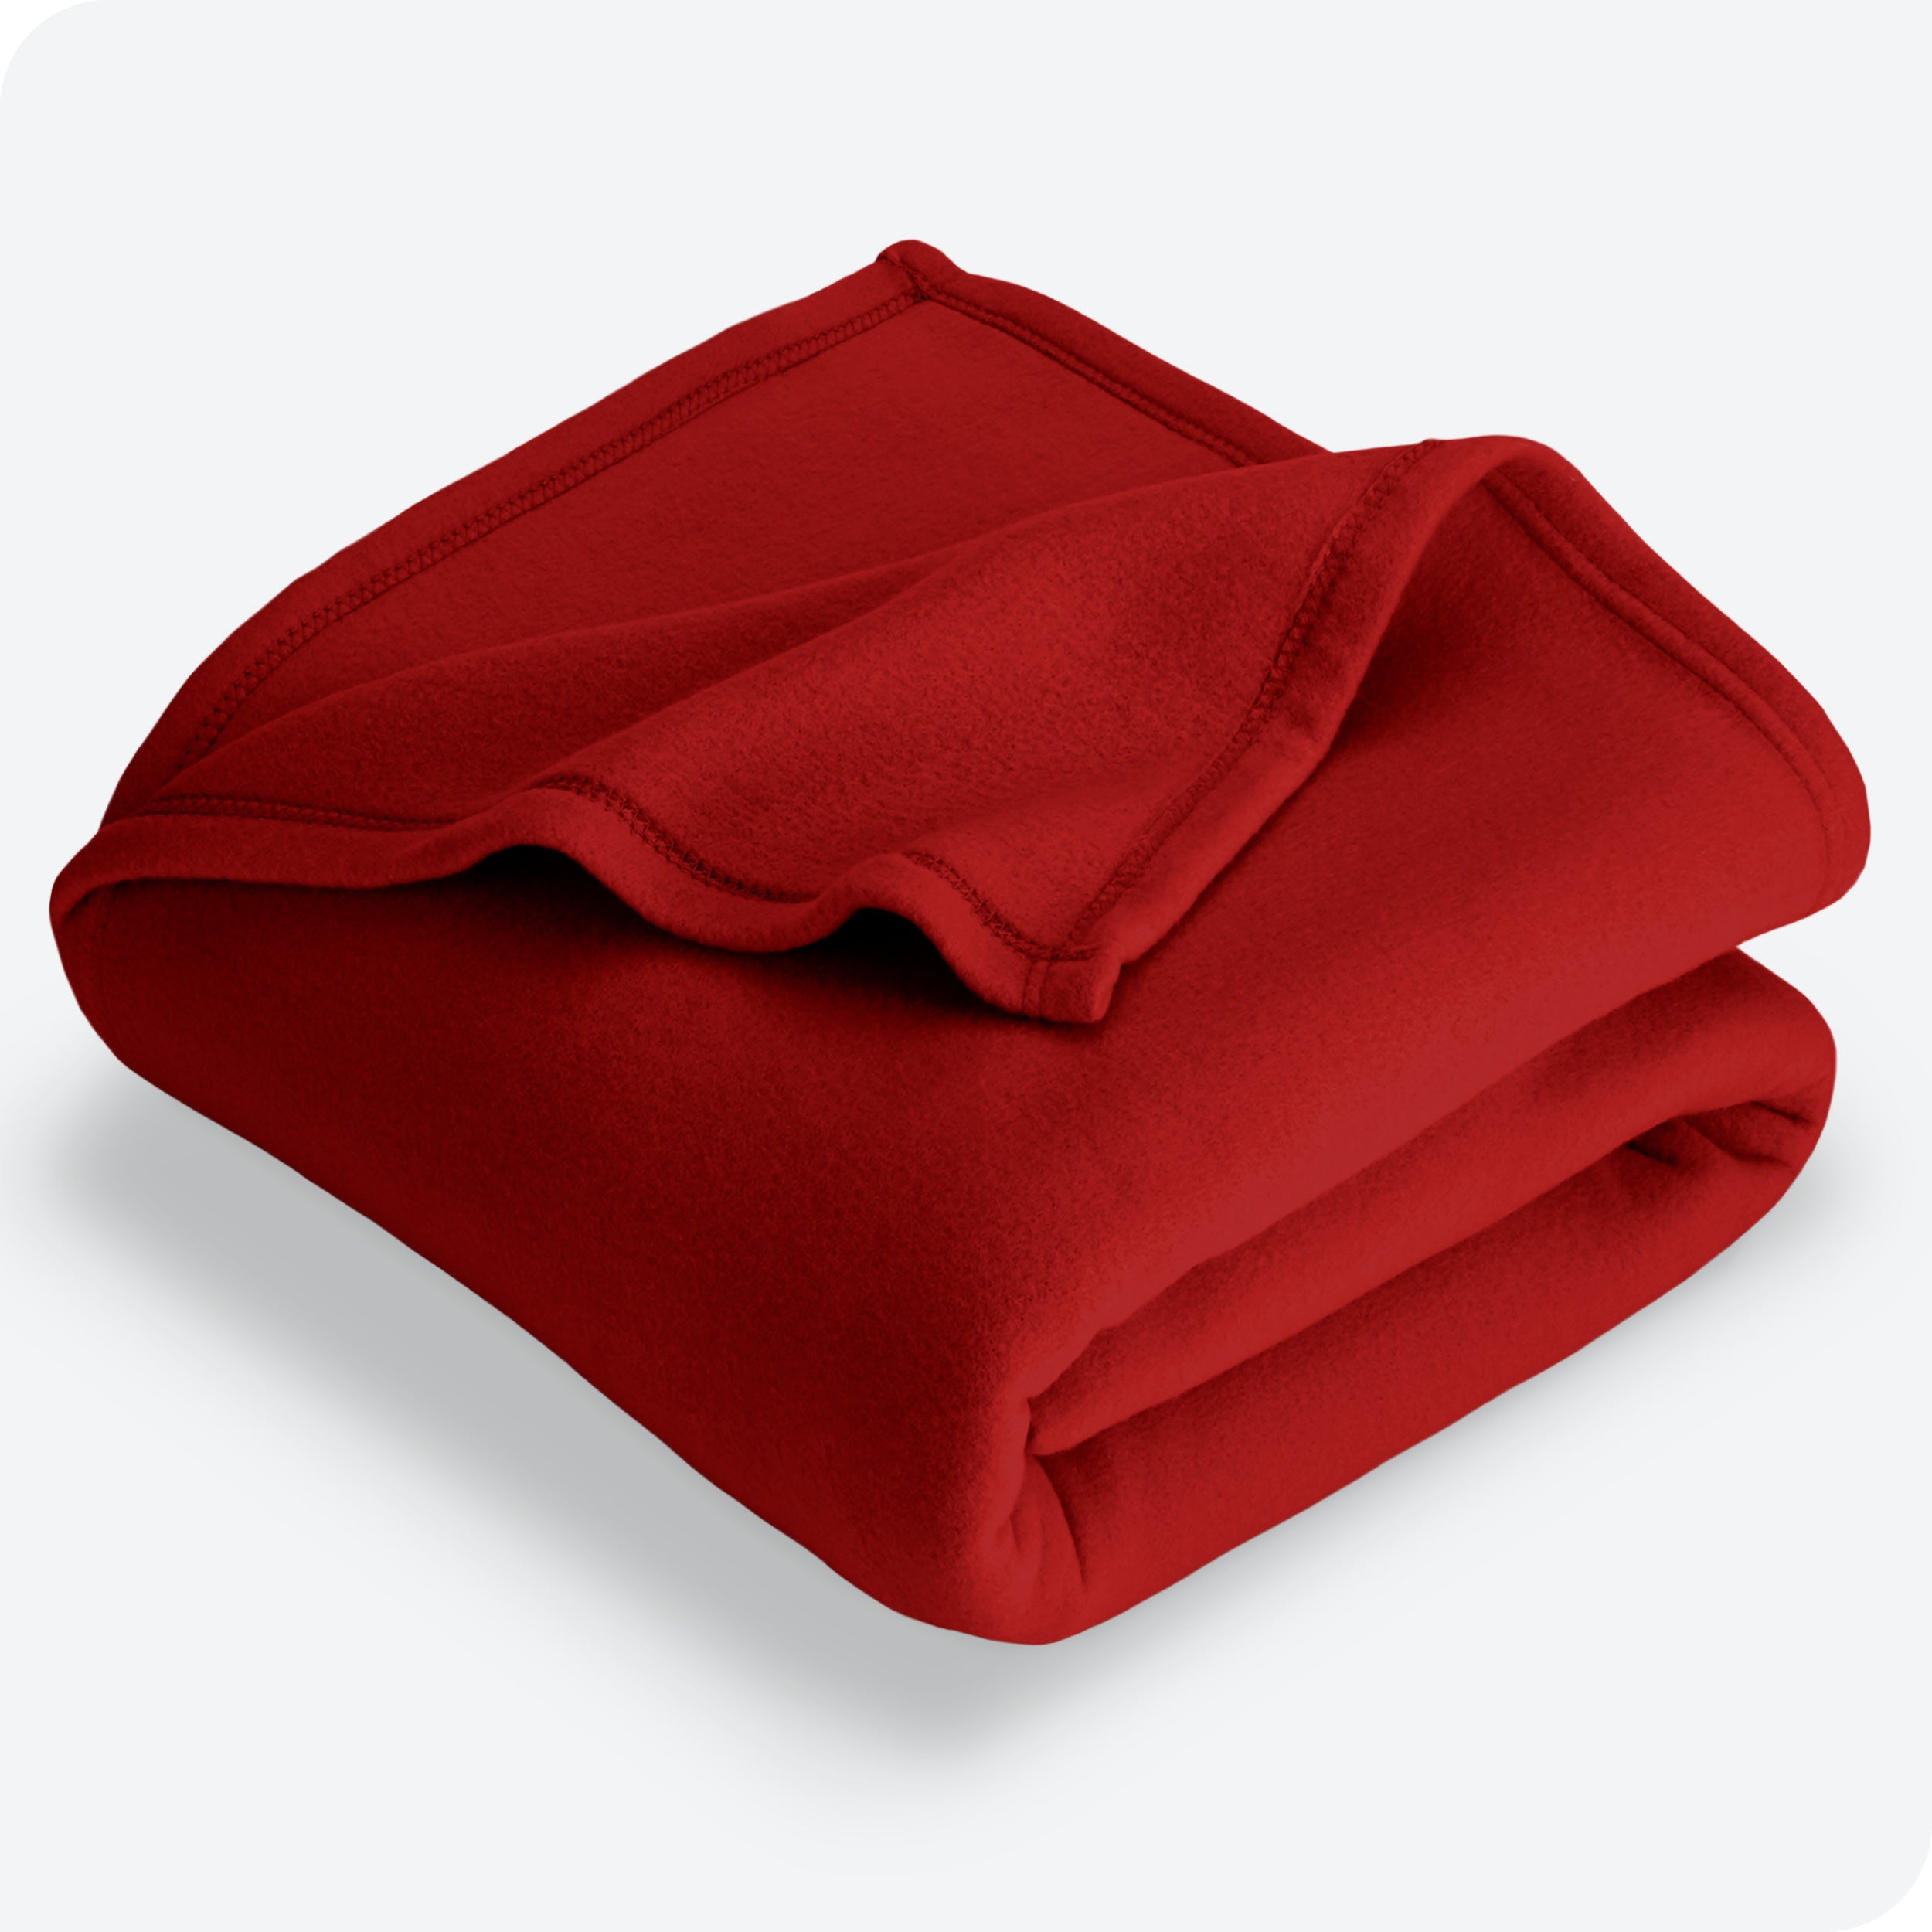 Red polar fleece blanket folded with 1 corner folded back